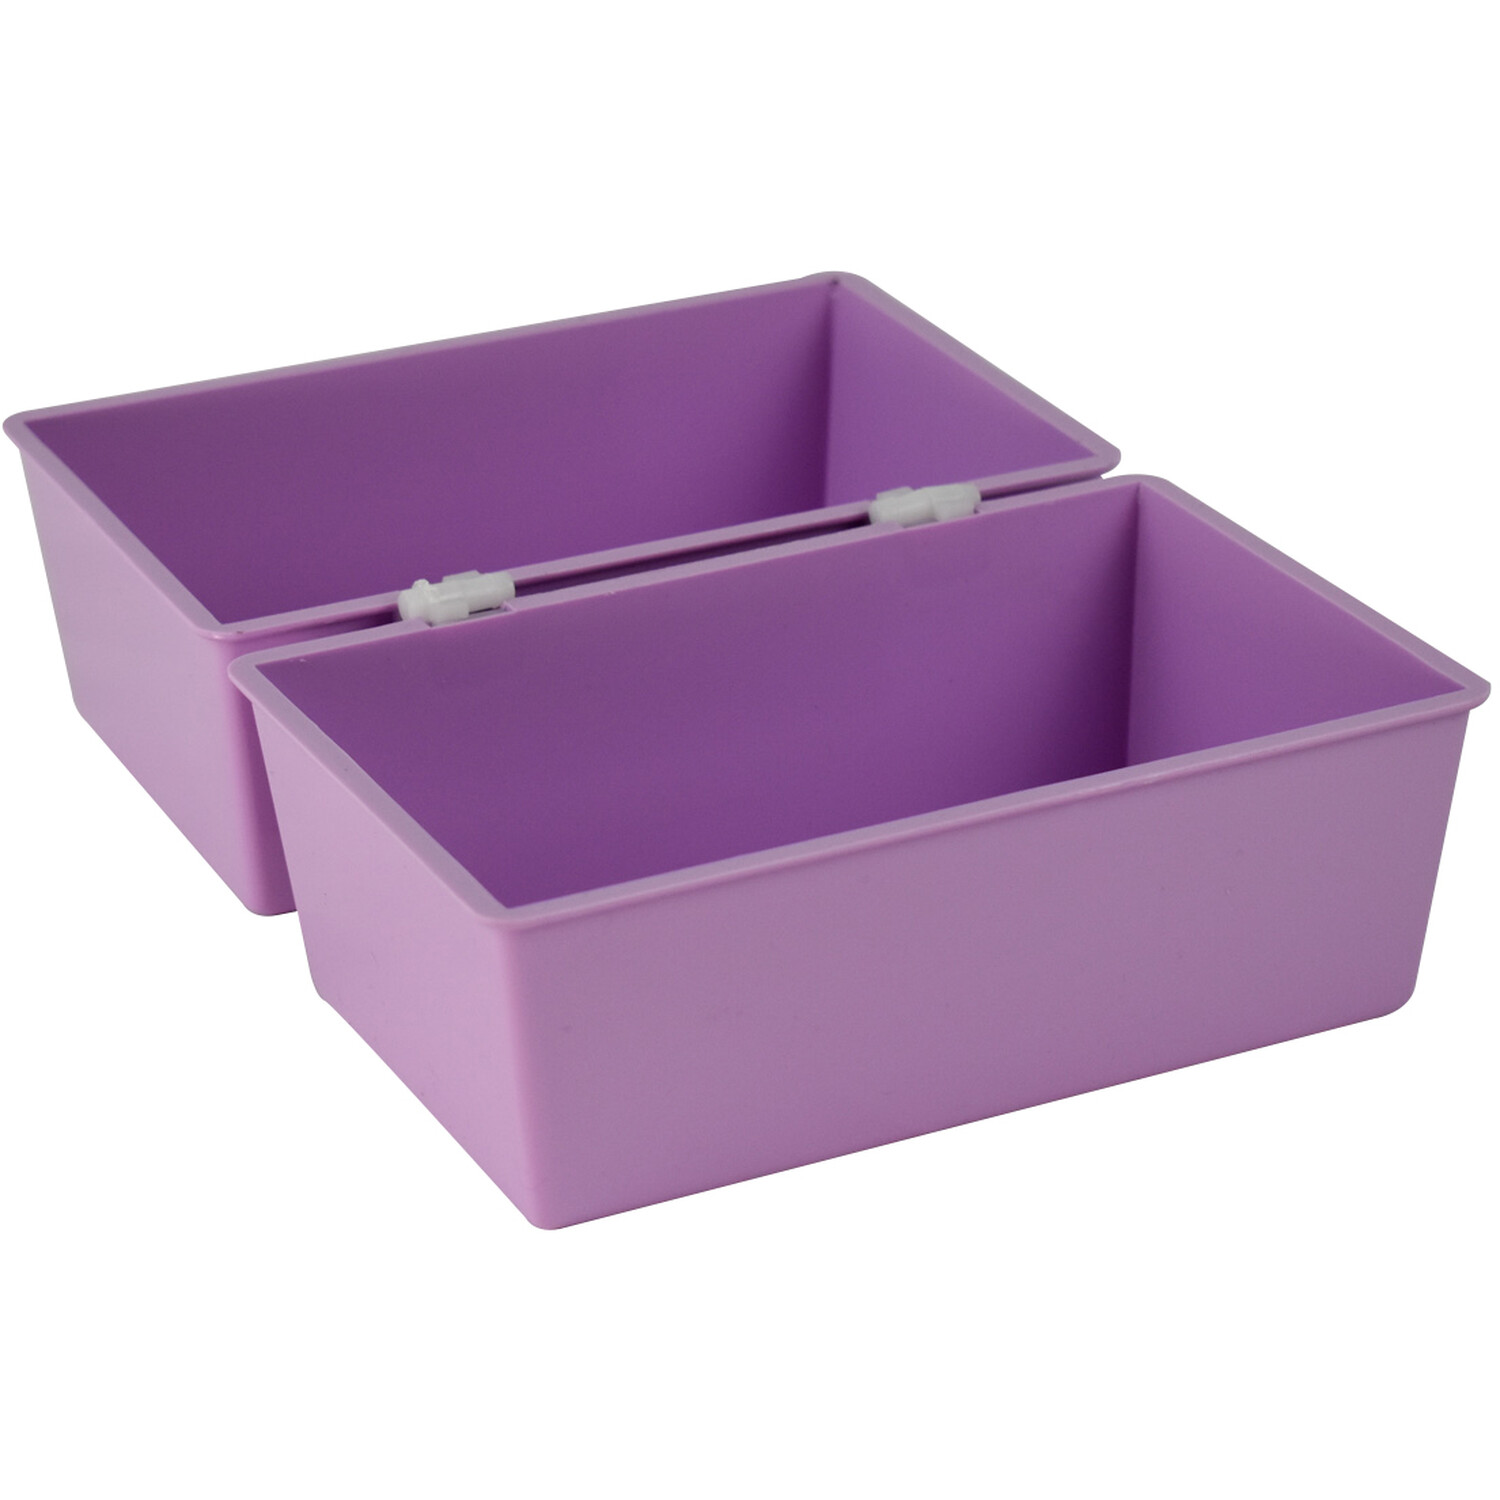 Deflecto Card Index Box - Lavender Image 3